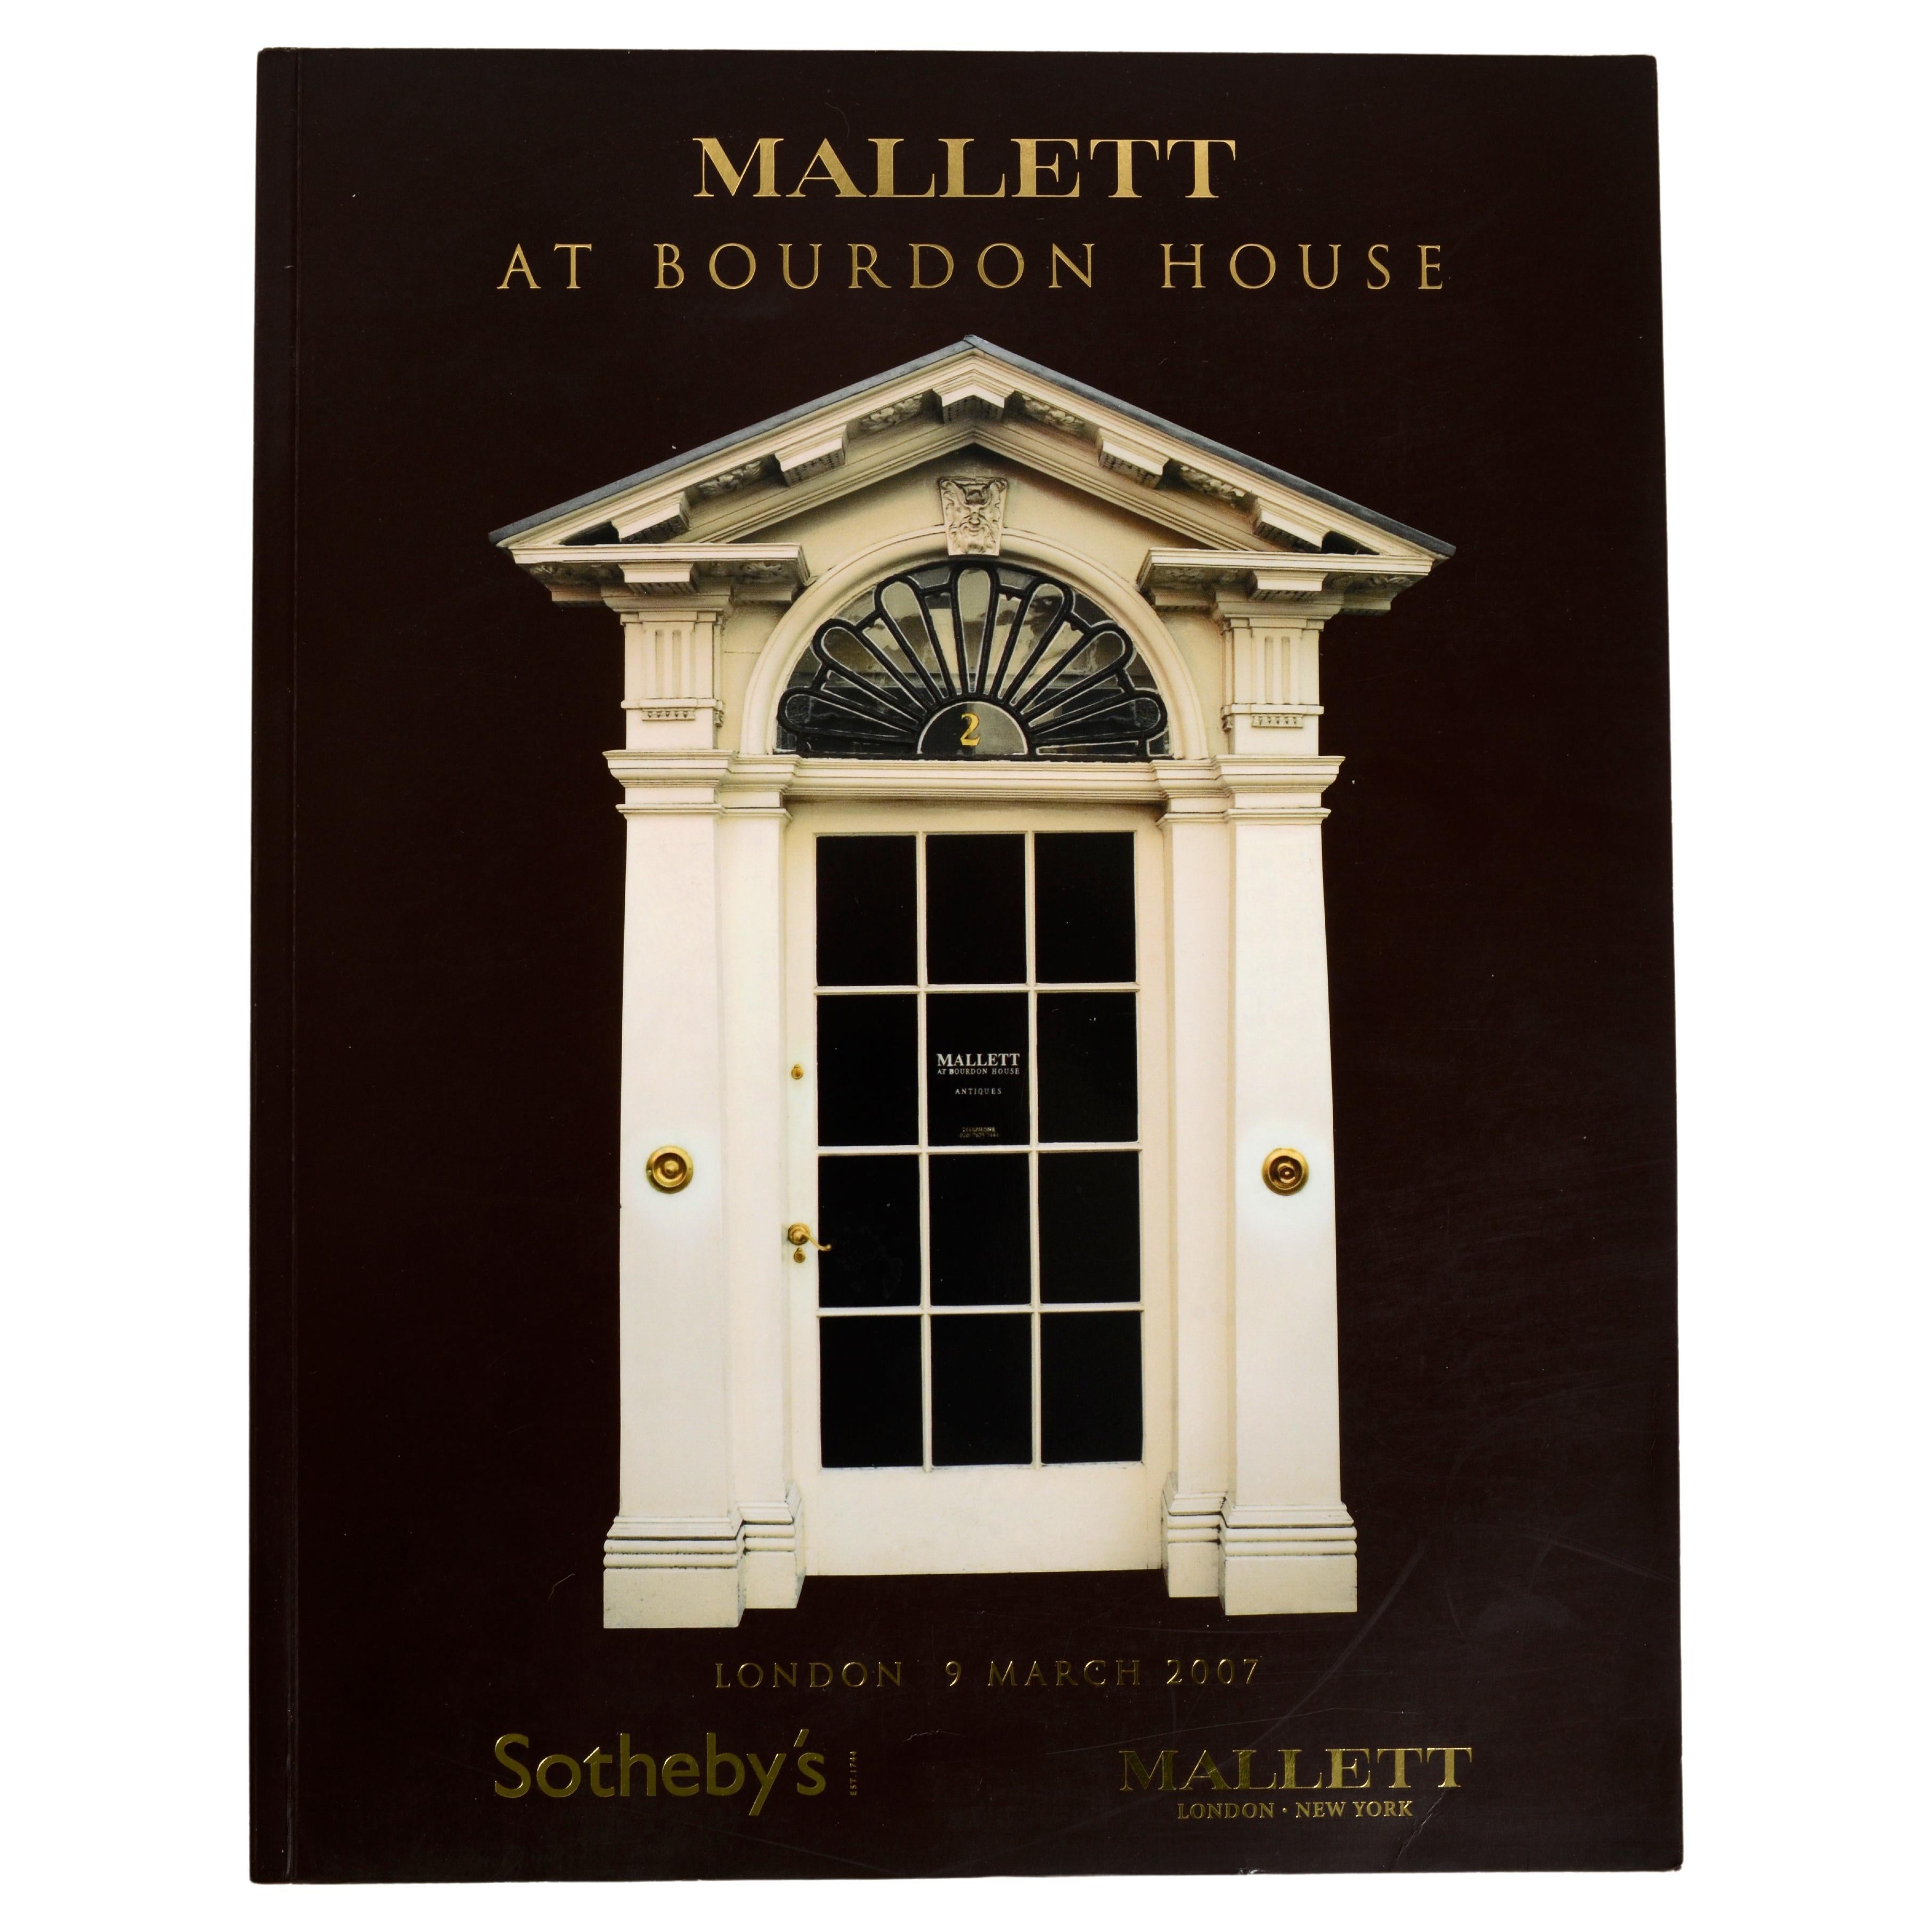 Mallet im Bourdon House, London, 9. März 2007, Sotheby's